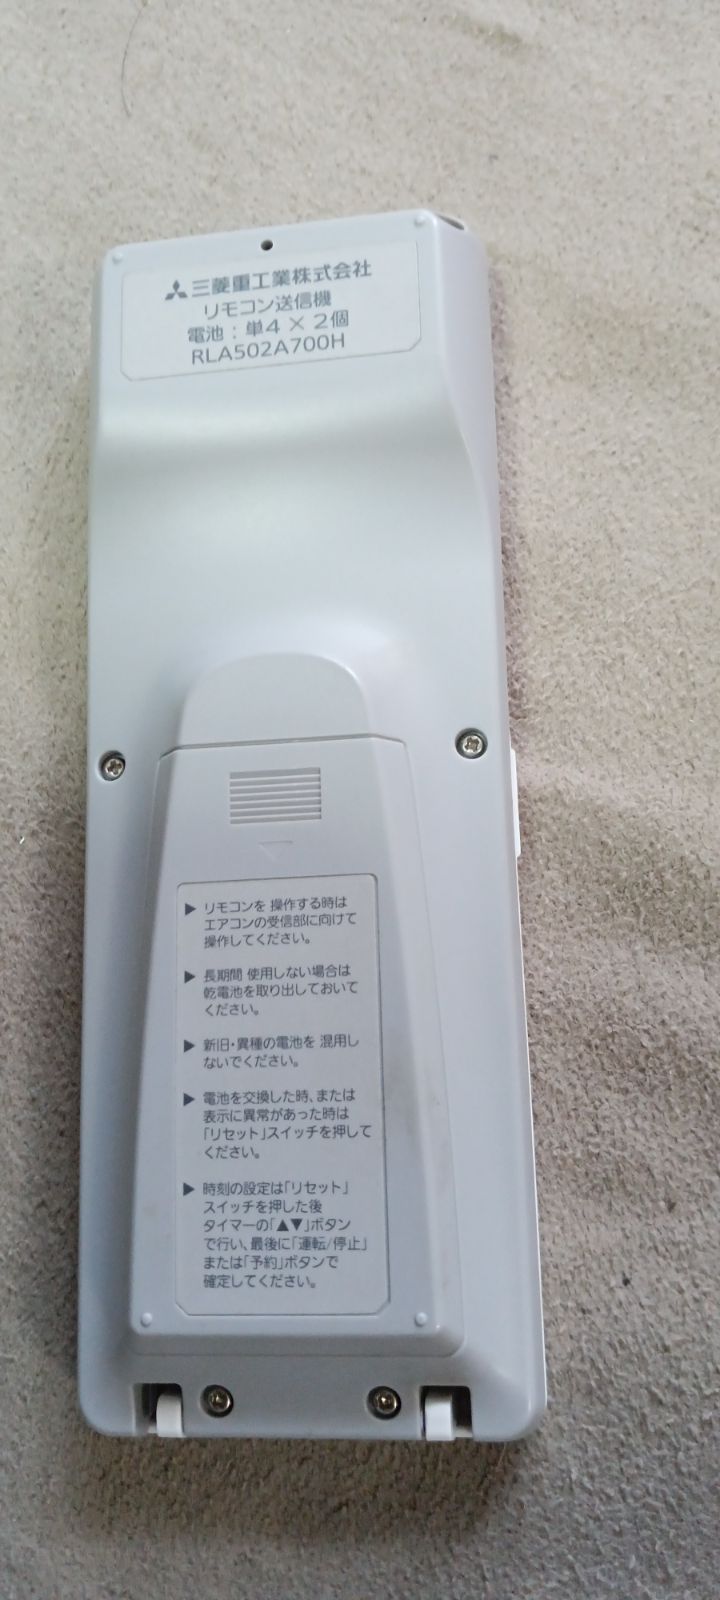 MITSUBISHI エアコン用リモコン RLA502A700H - ライフリサイクル - メルカリ